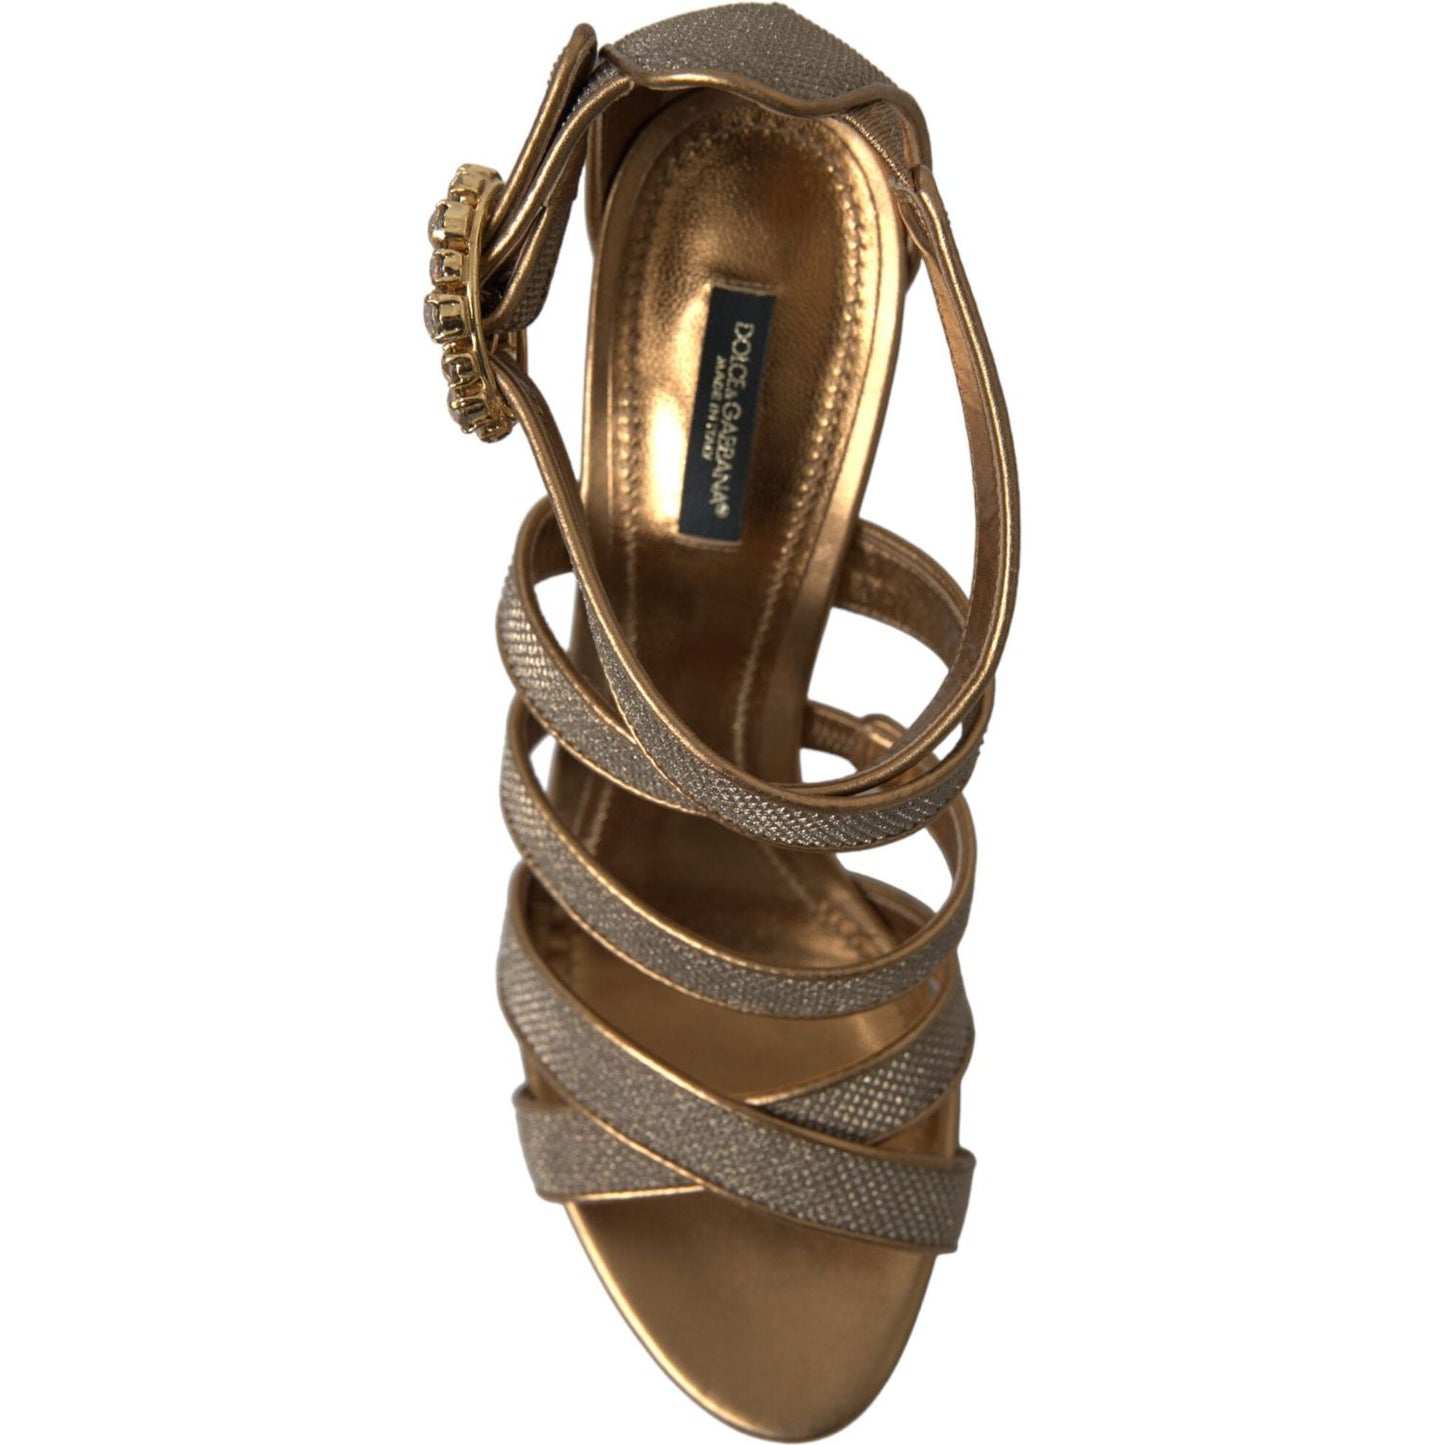 Dolce & Gabbana Bronze Crystal Stiletto Heels Sandals bronze-crystal-strap-heels-sandals-shoes 465A9303-bg-scaled-e7523a38-47b.jpg